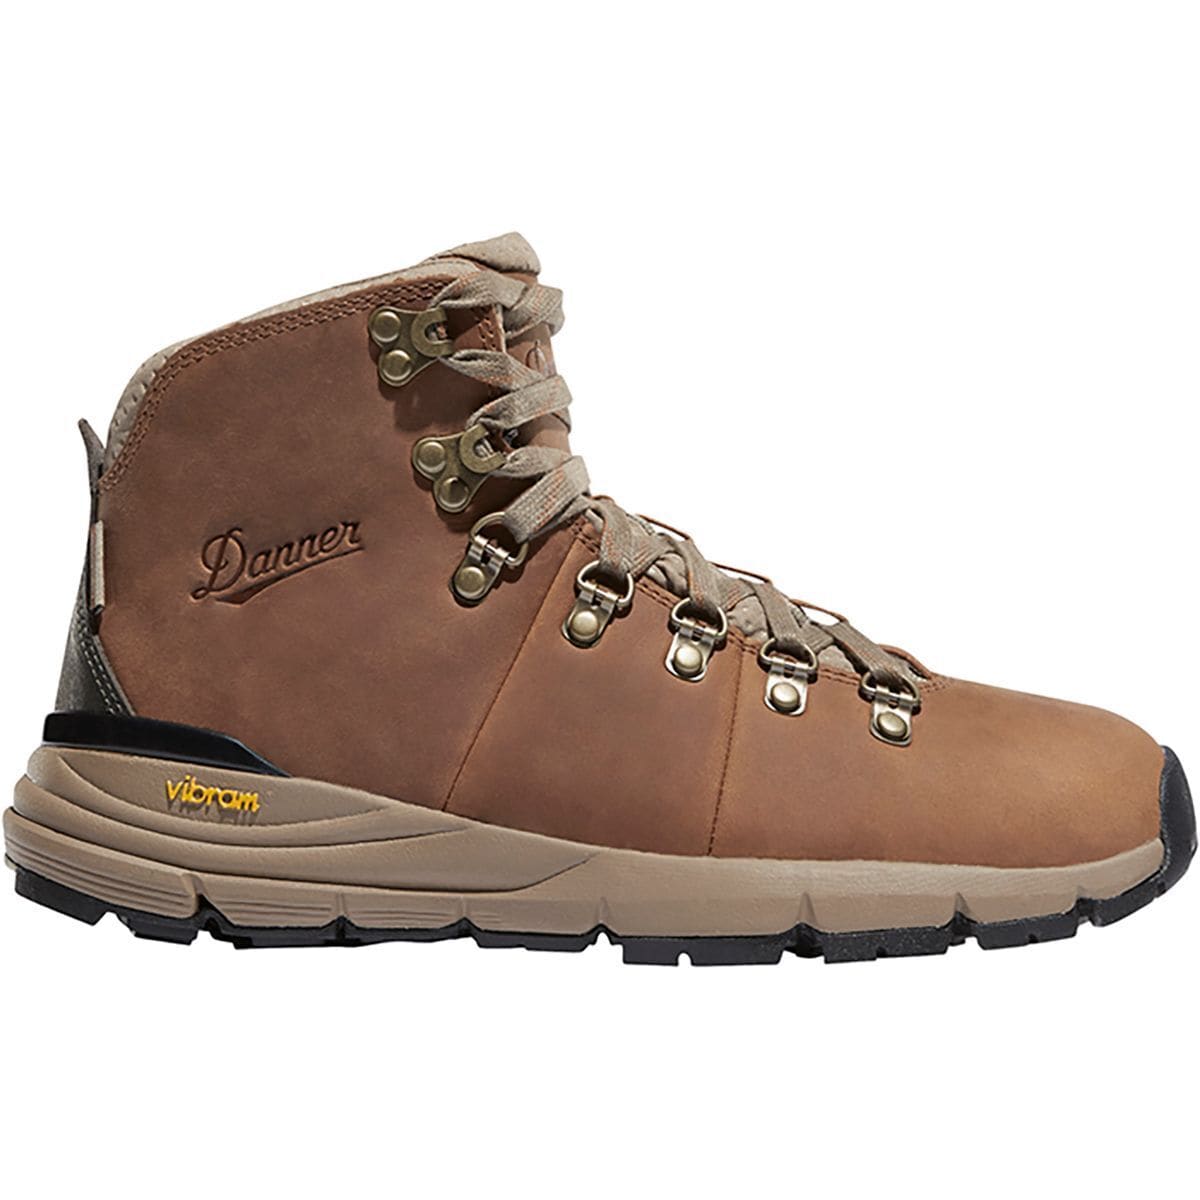 Mountain 600 Full Grain Leather Hiking Boot - Women